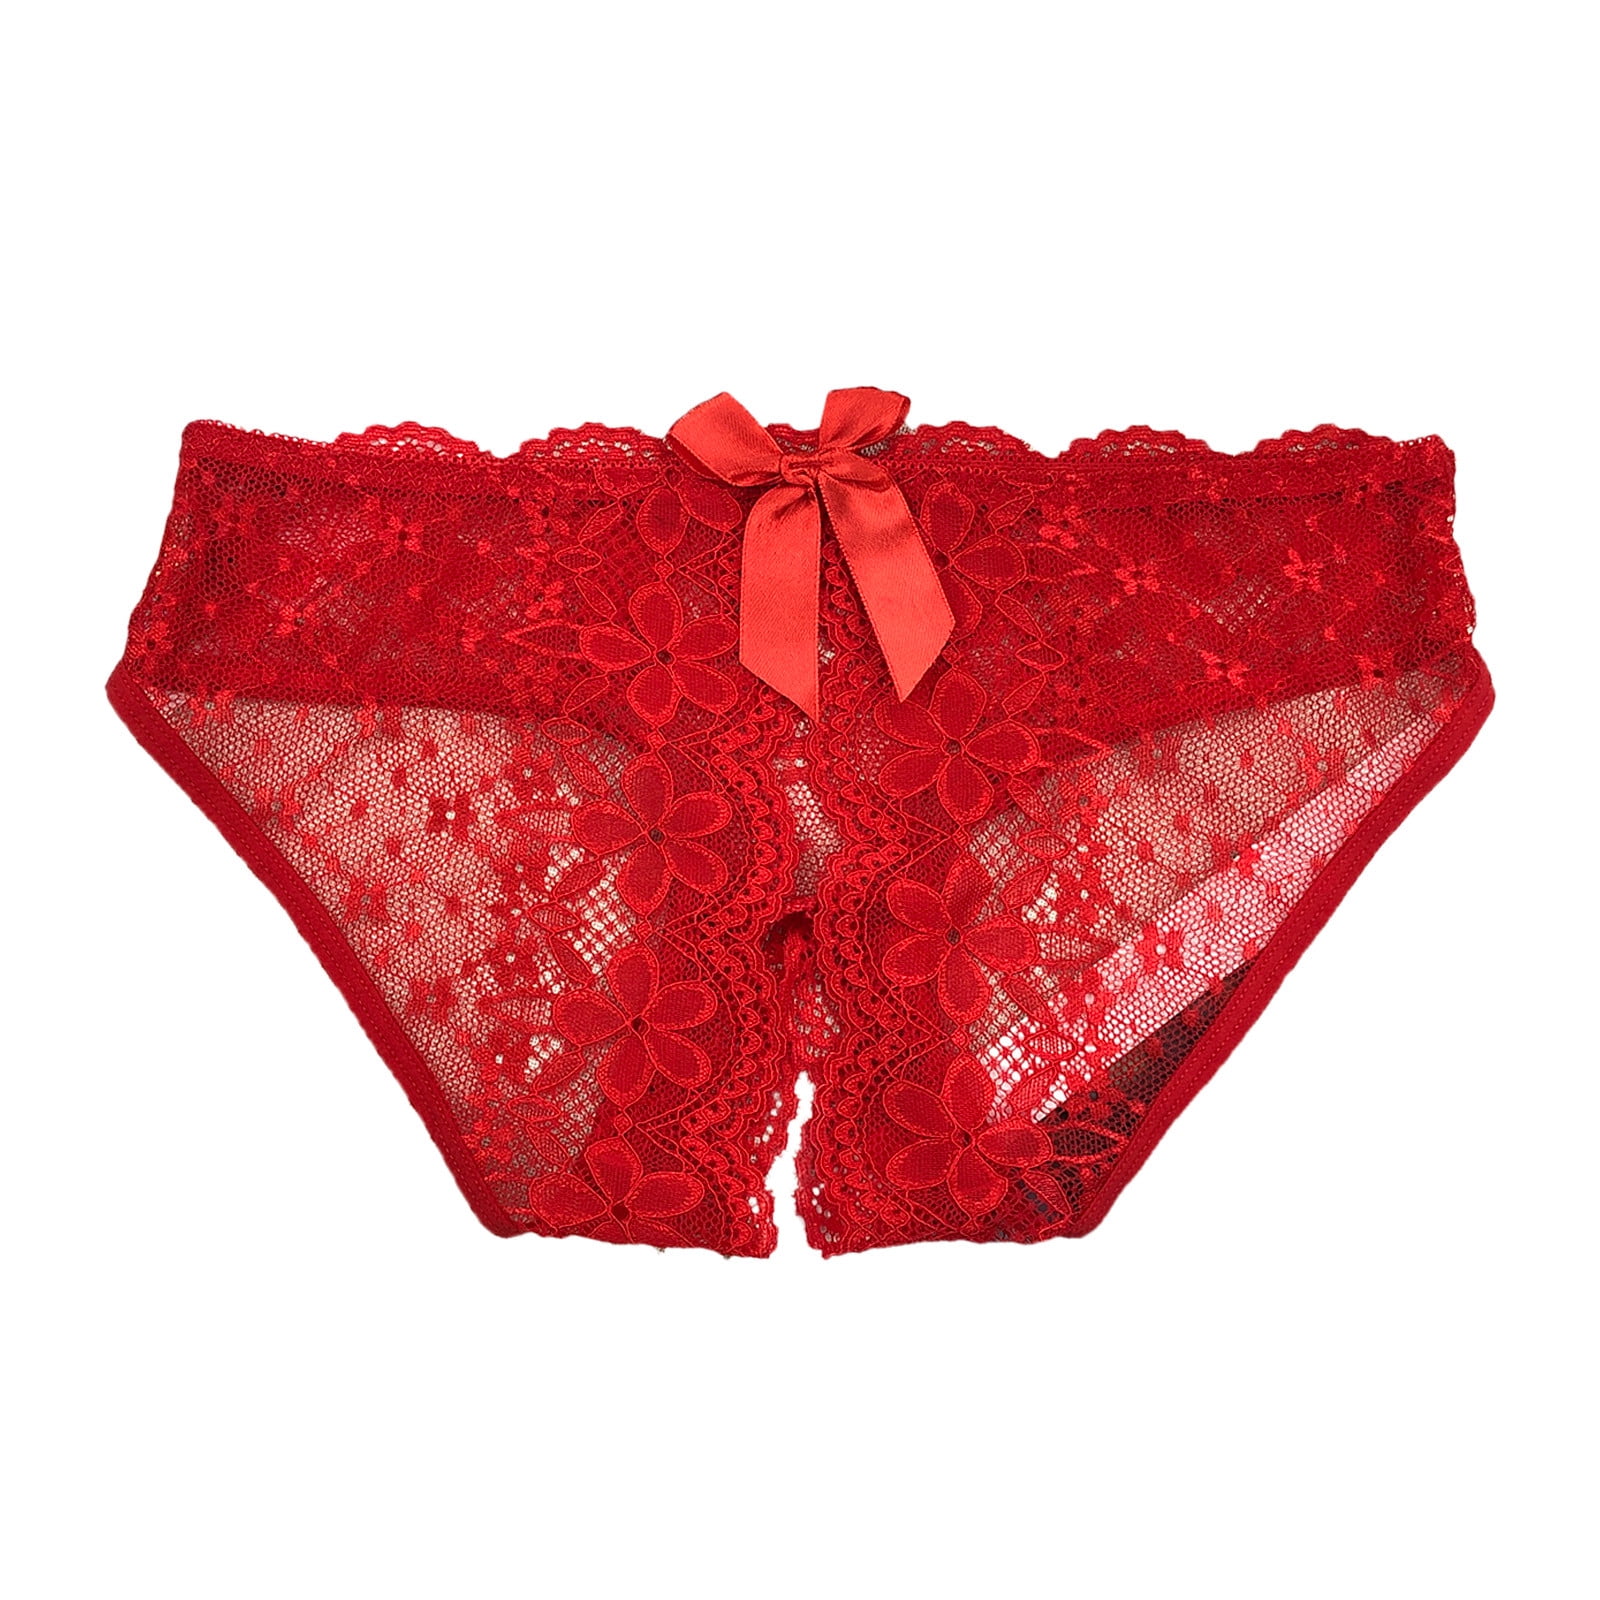 Betiyuaoe Women Underwear Briefs lace Seamless Cotton Panty Hollow Purple/L  Panties